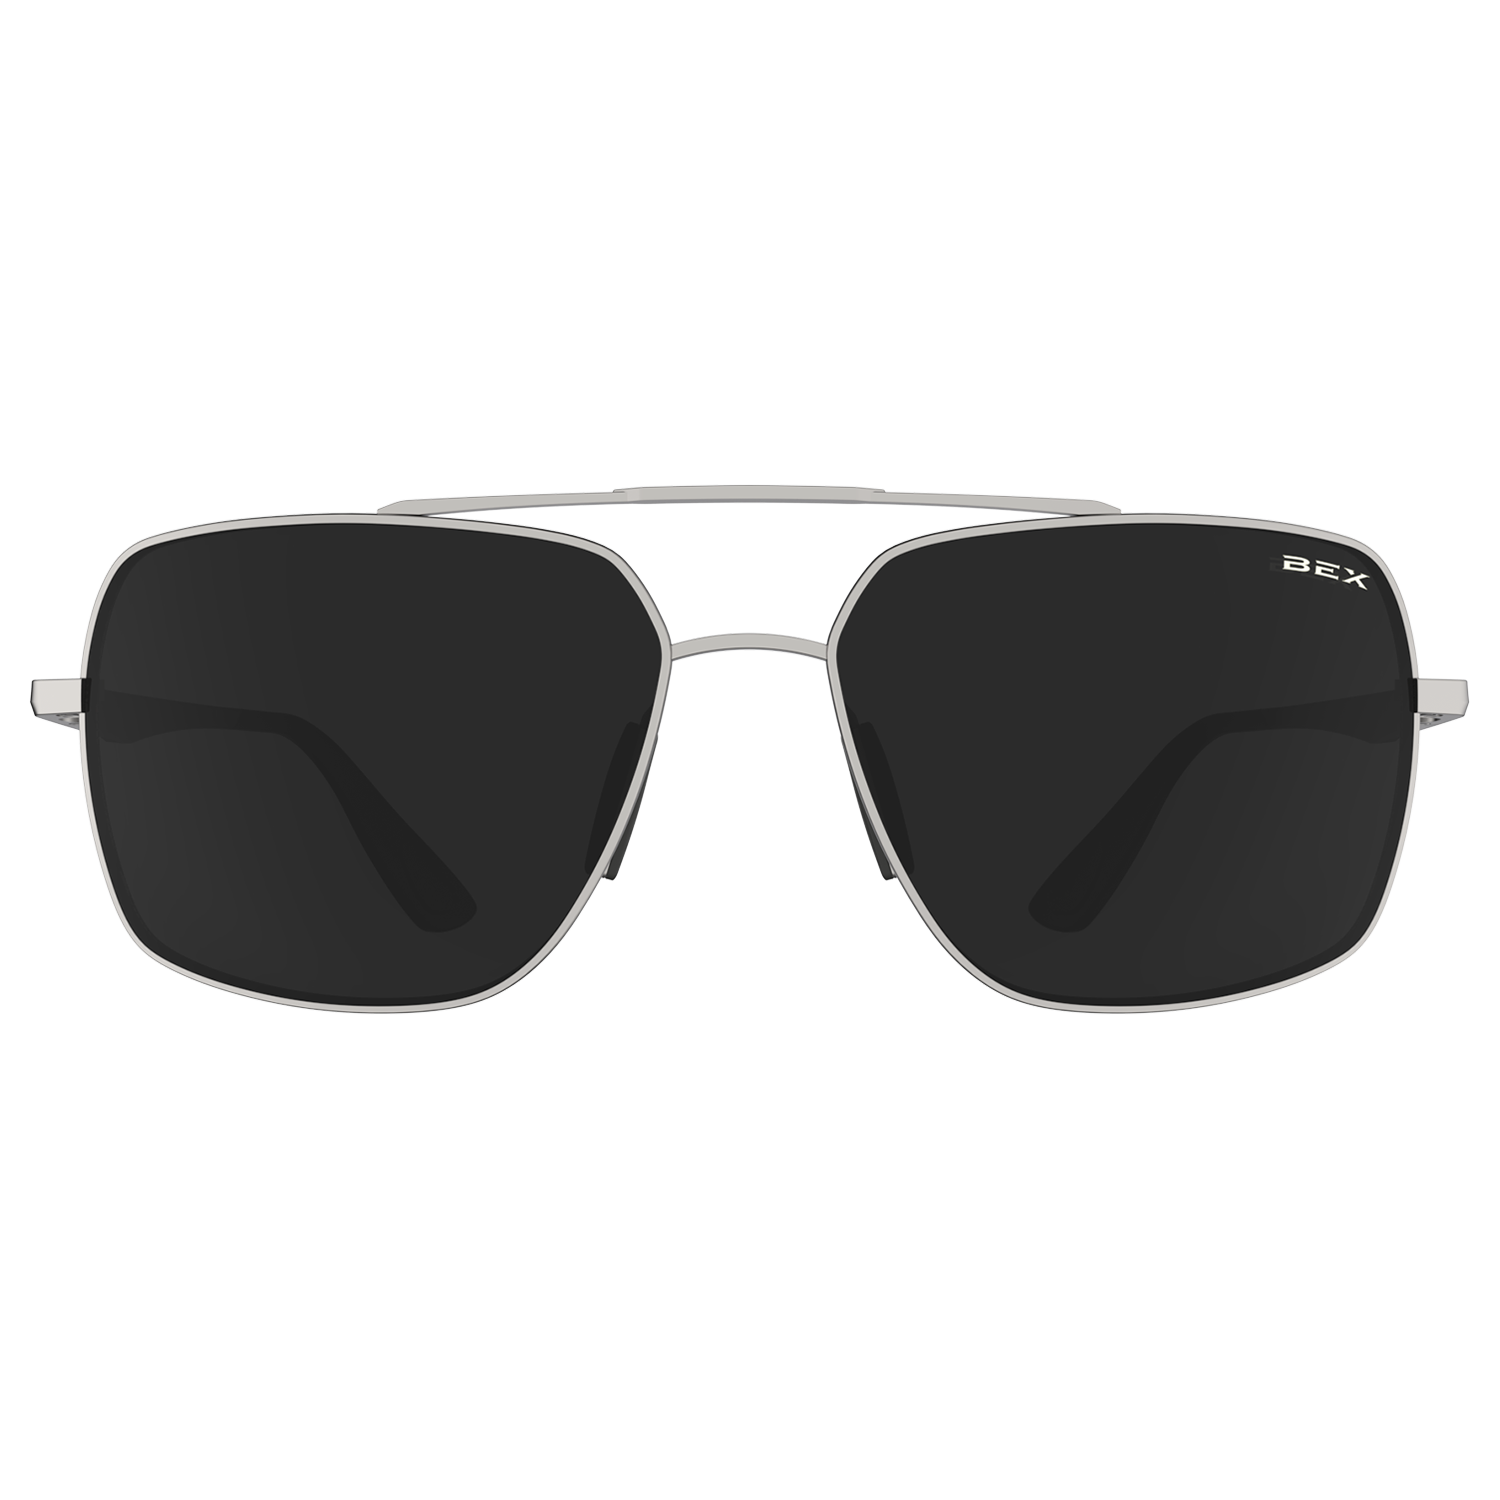 Bex Sunglasses MACH- Matte Silver/Grey